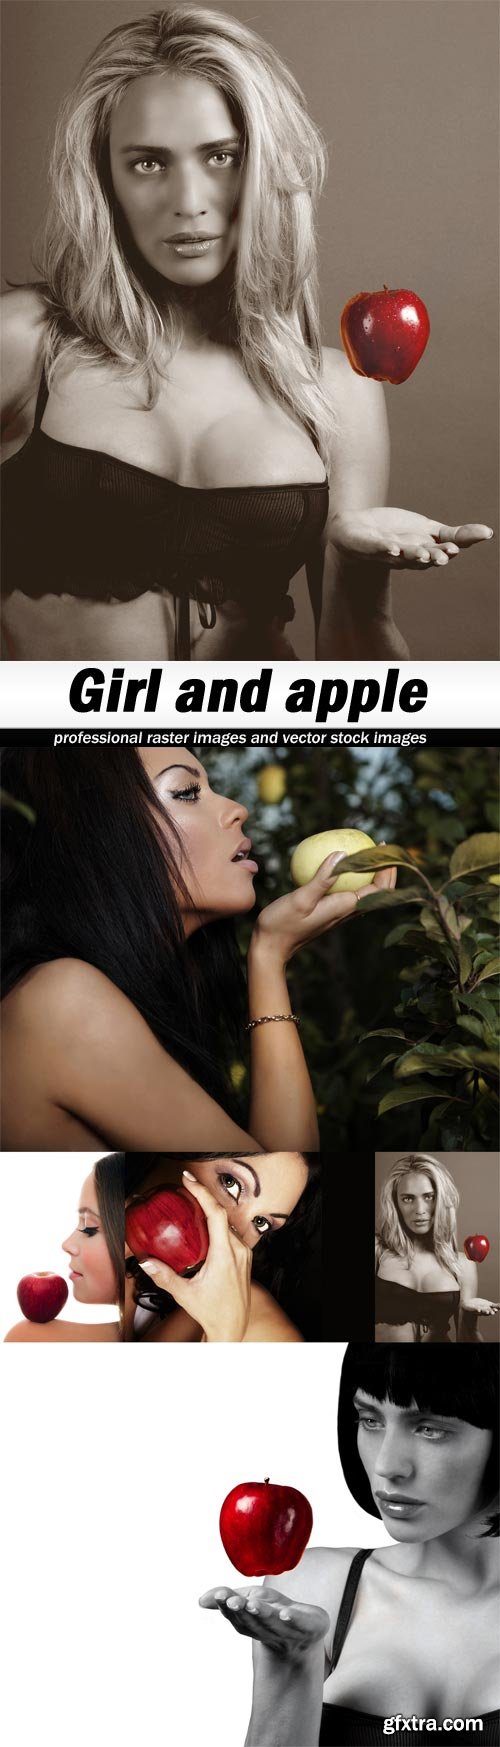 Girl and apple